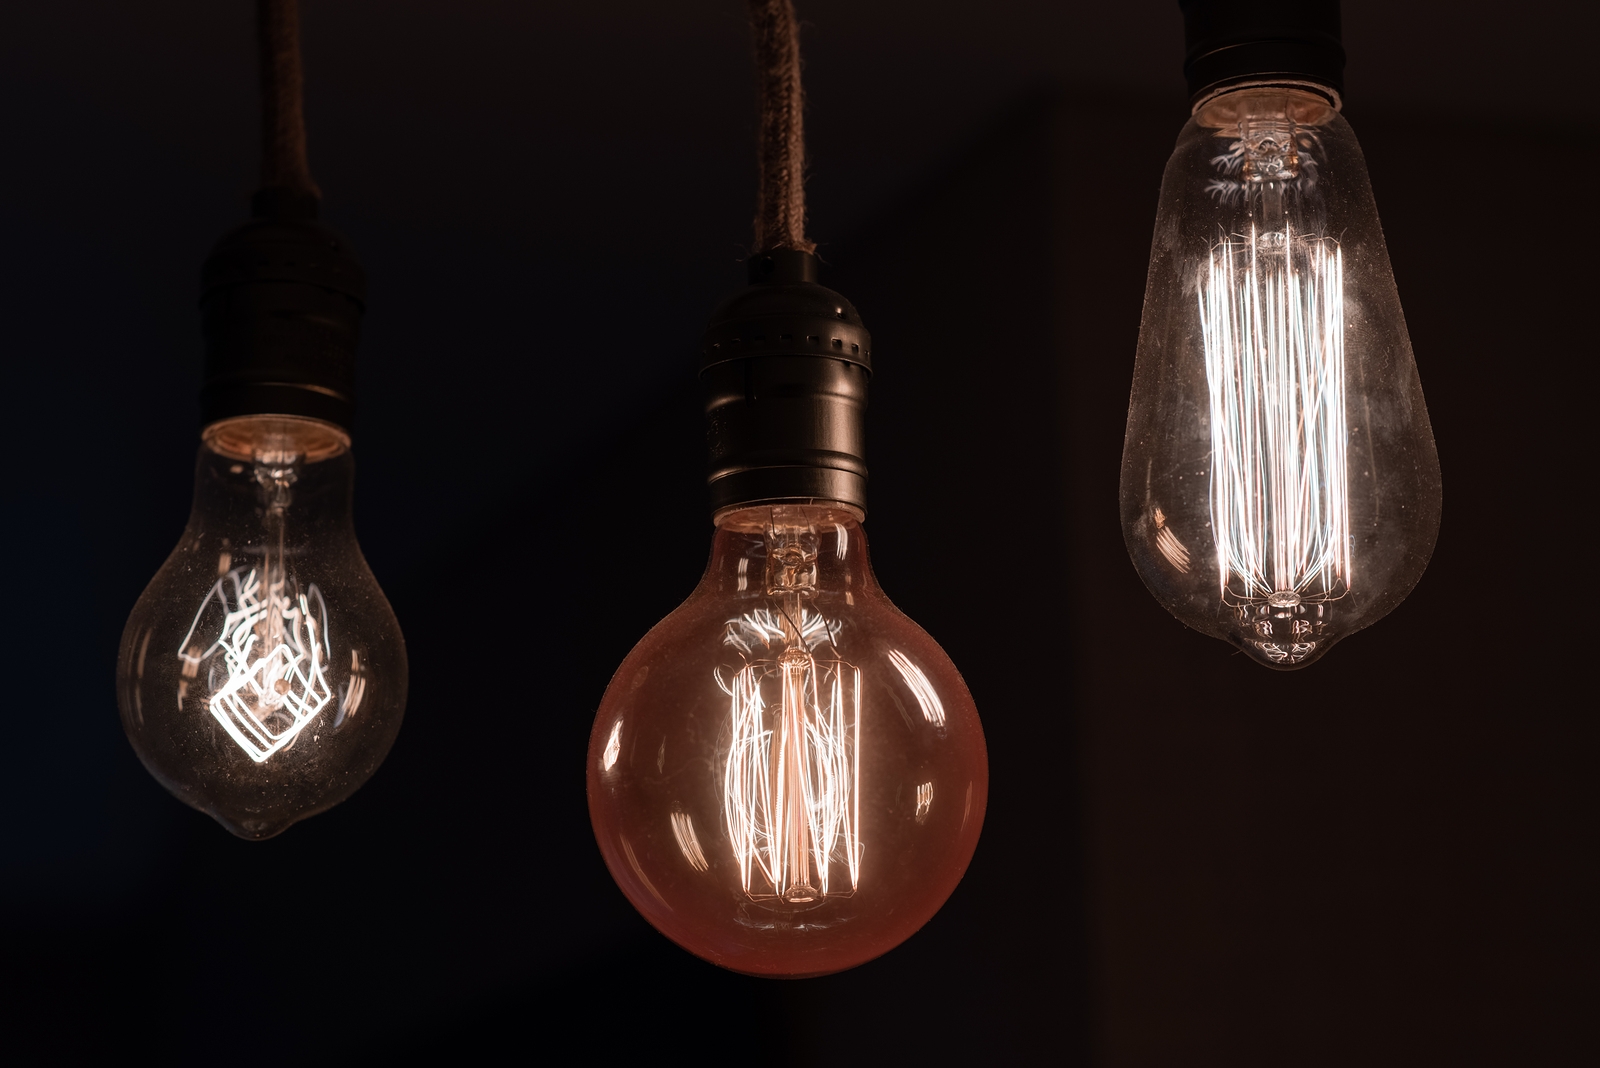 The Warm Vintage Style of Edison Bulbs